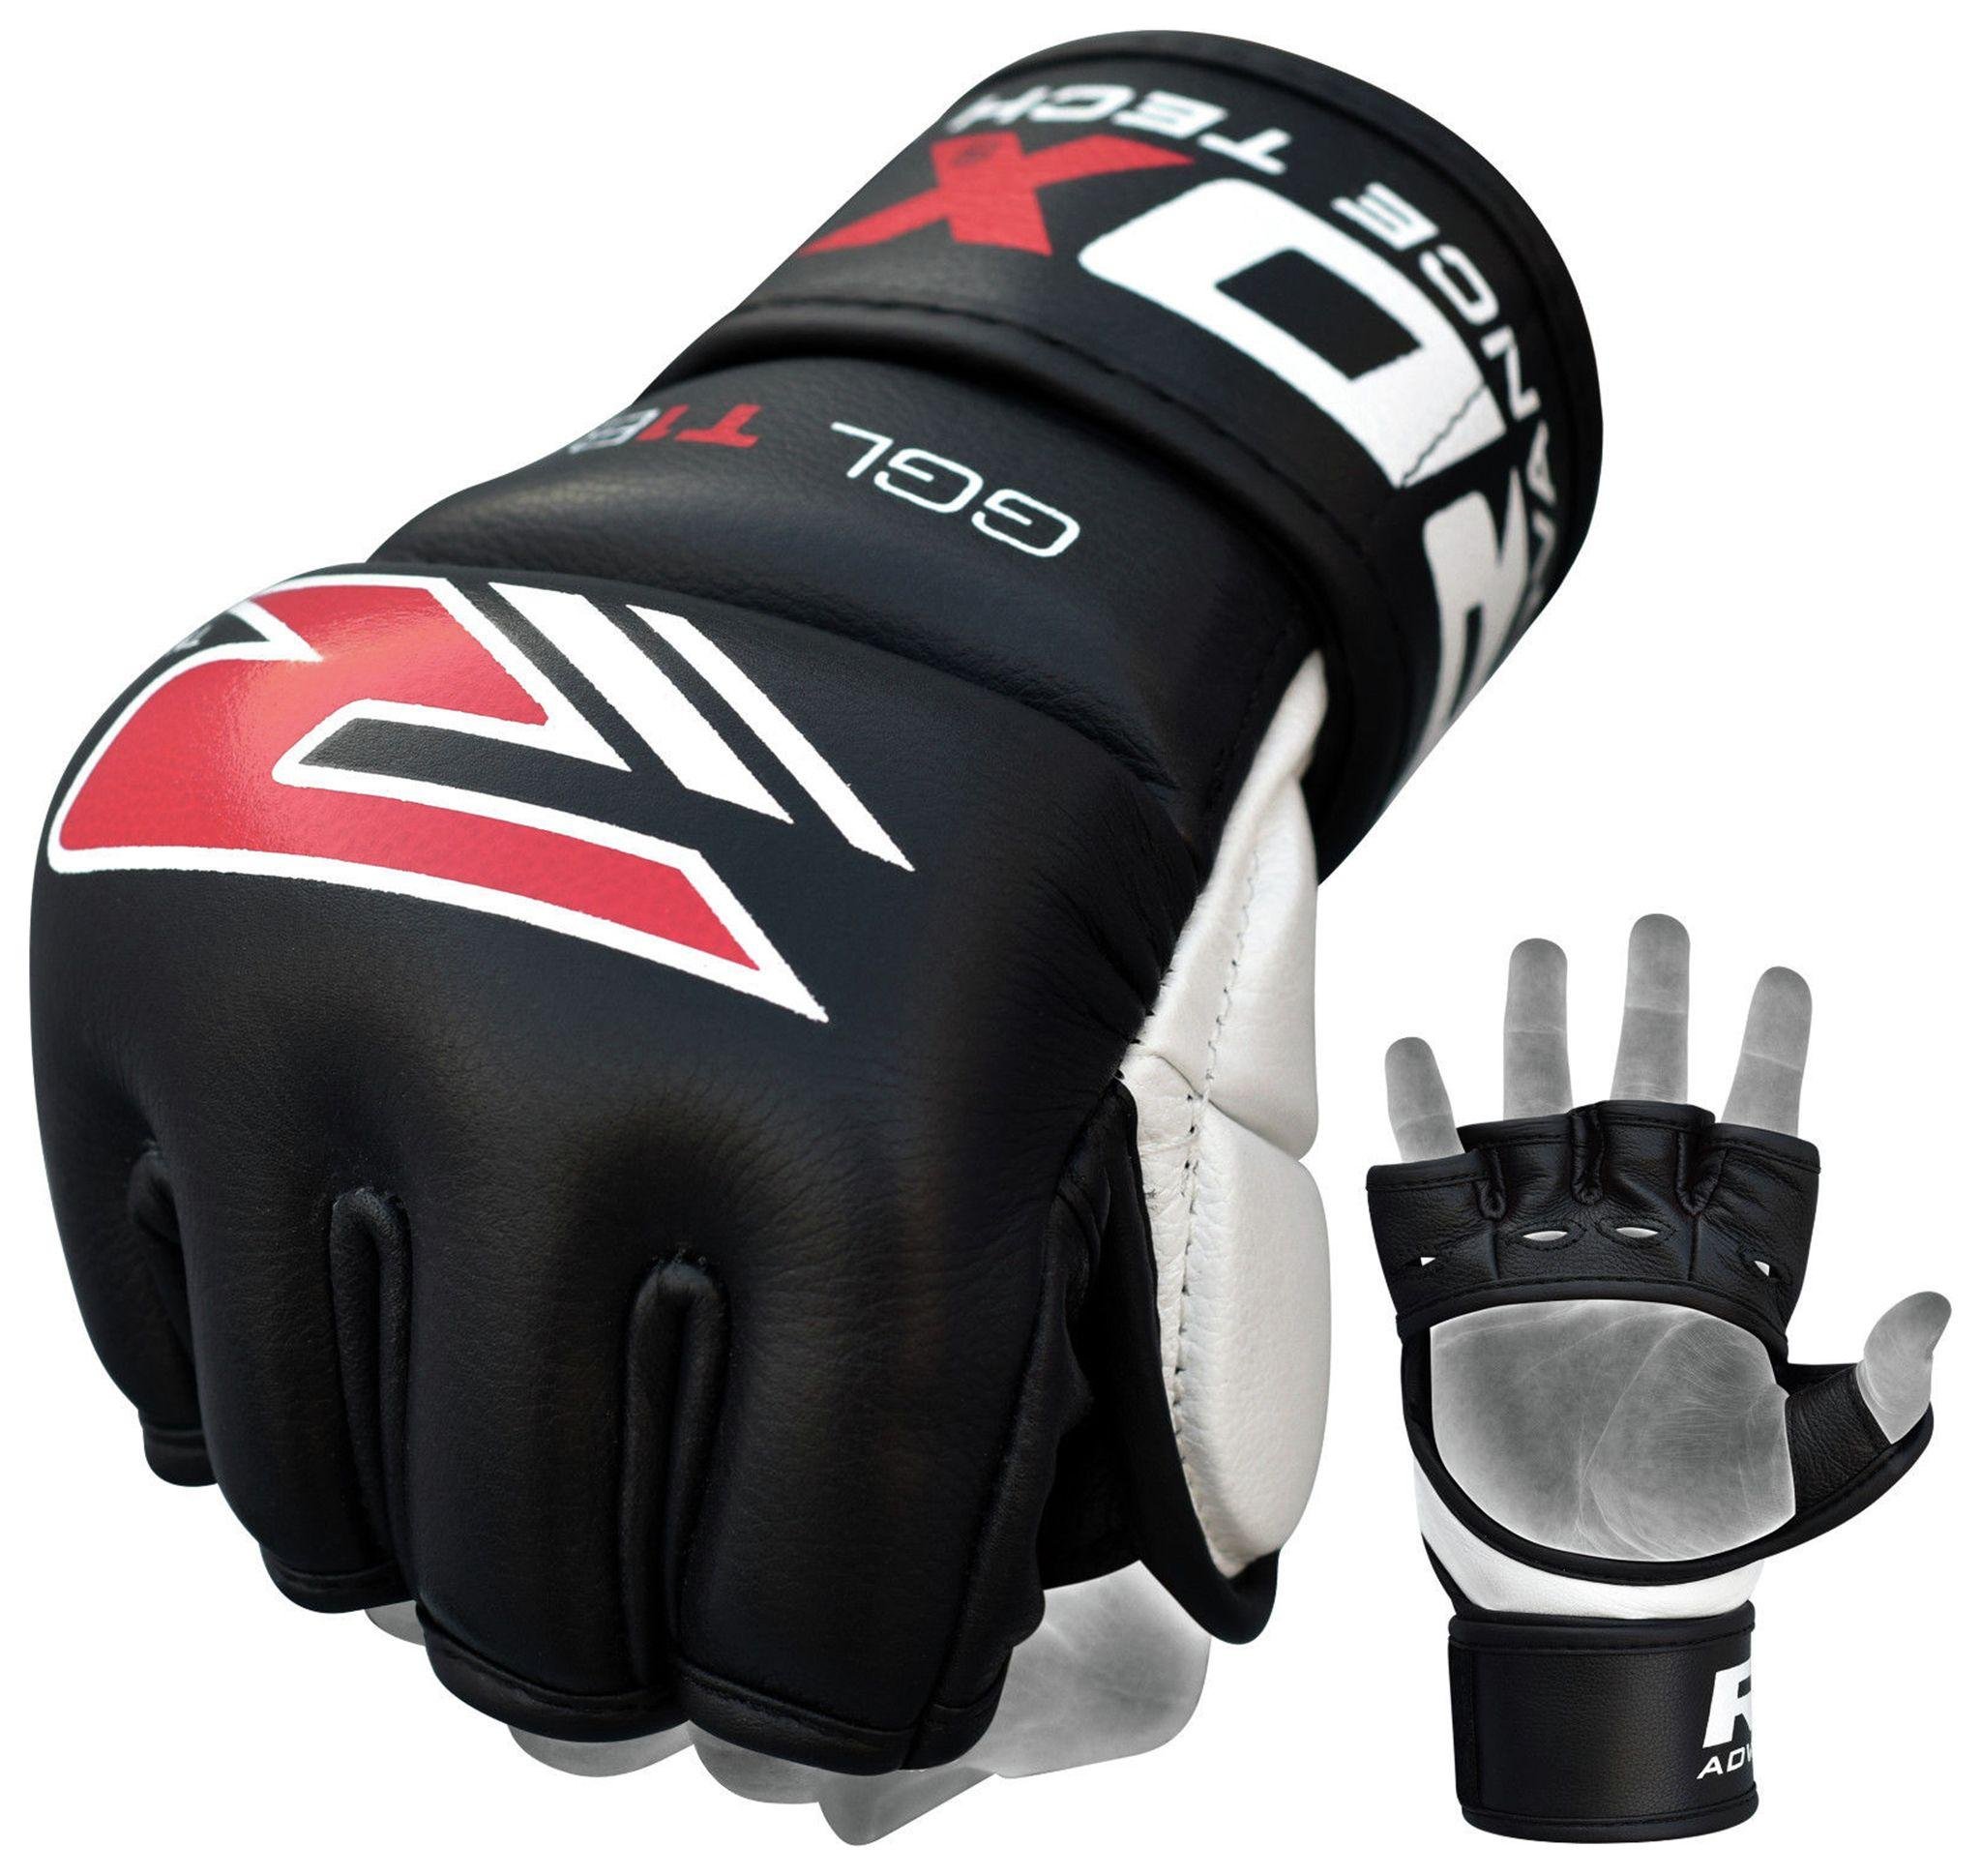 RDX Leather 7oz Mixed Martial Arts Gloves - Black.